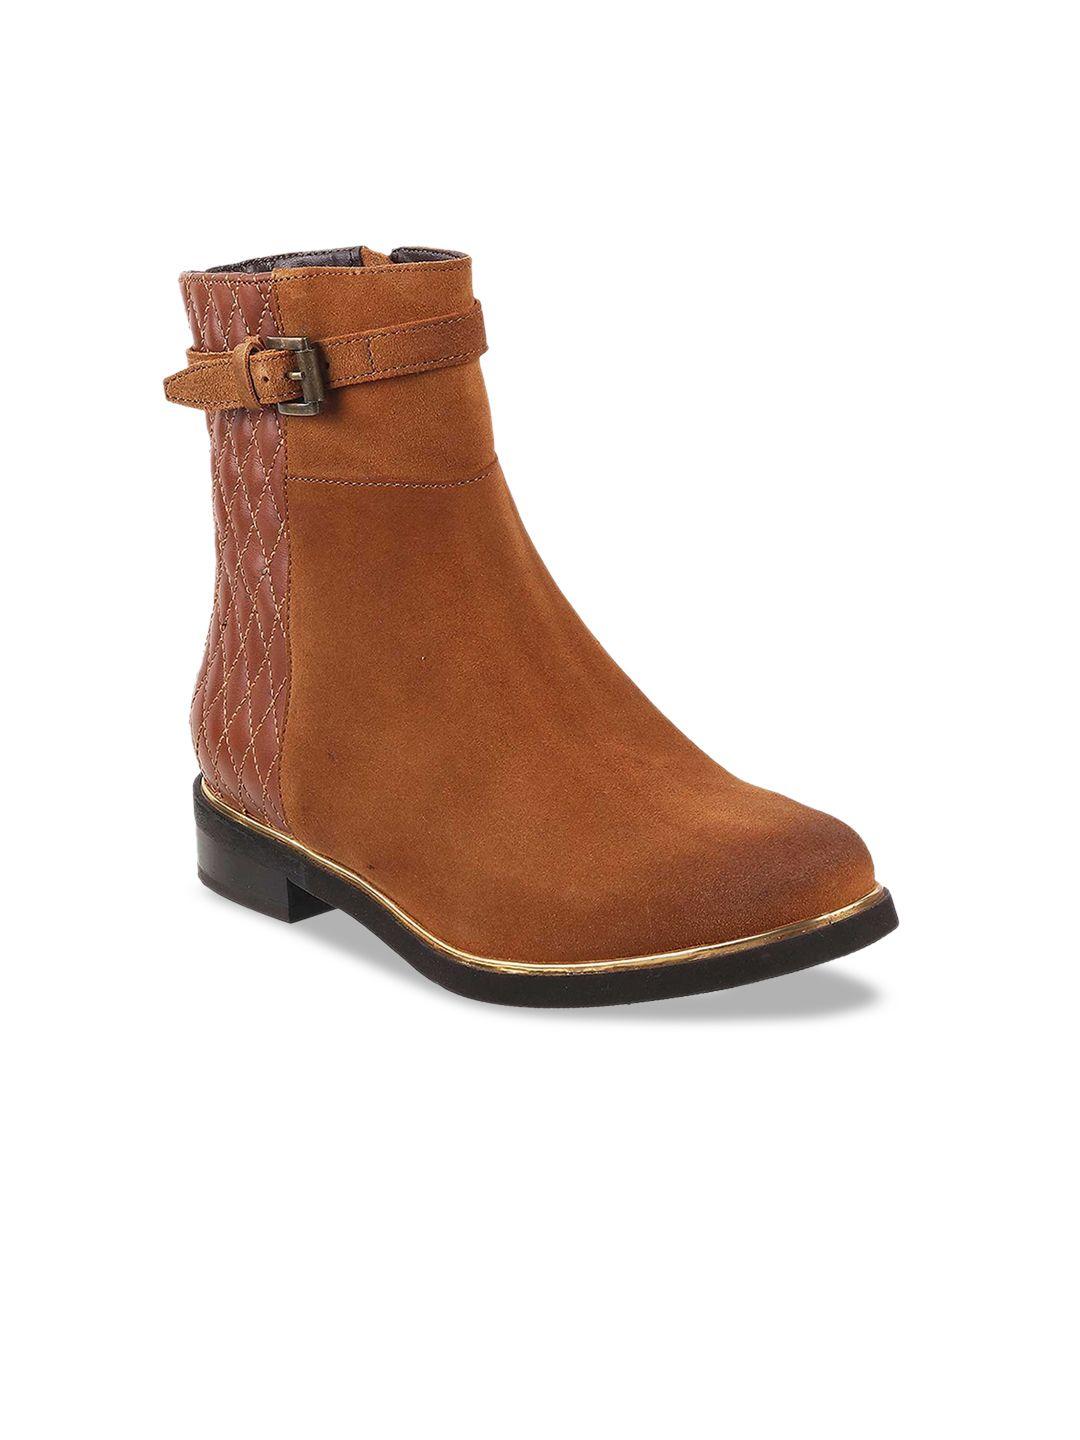 metro-women-tan-brown-textured-flat-boots